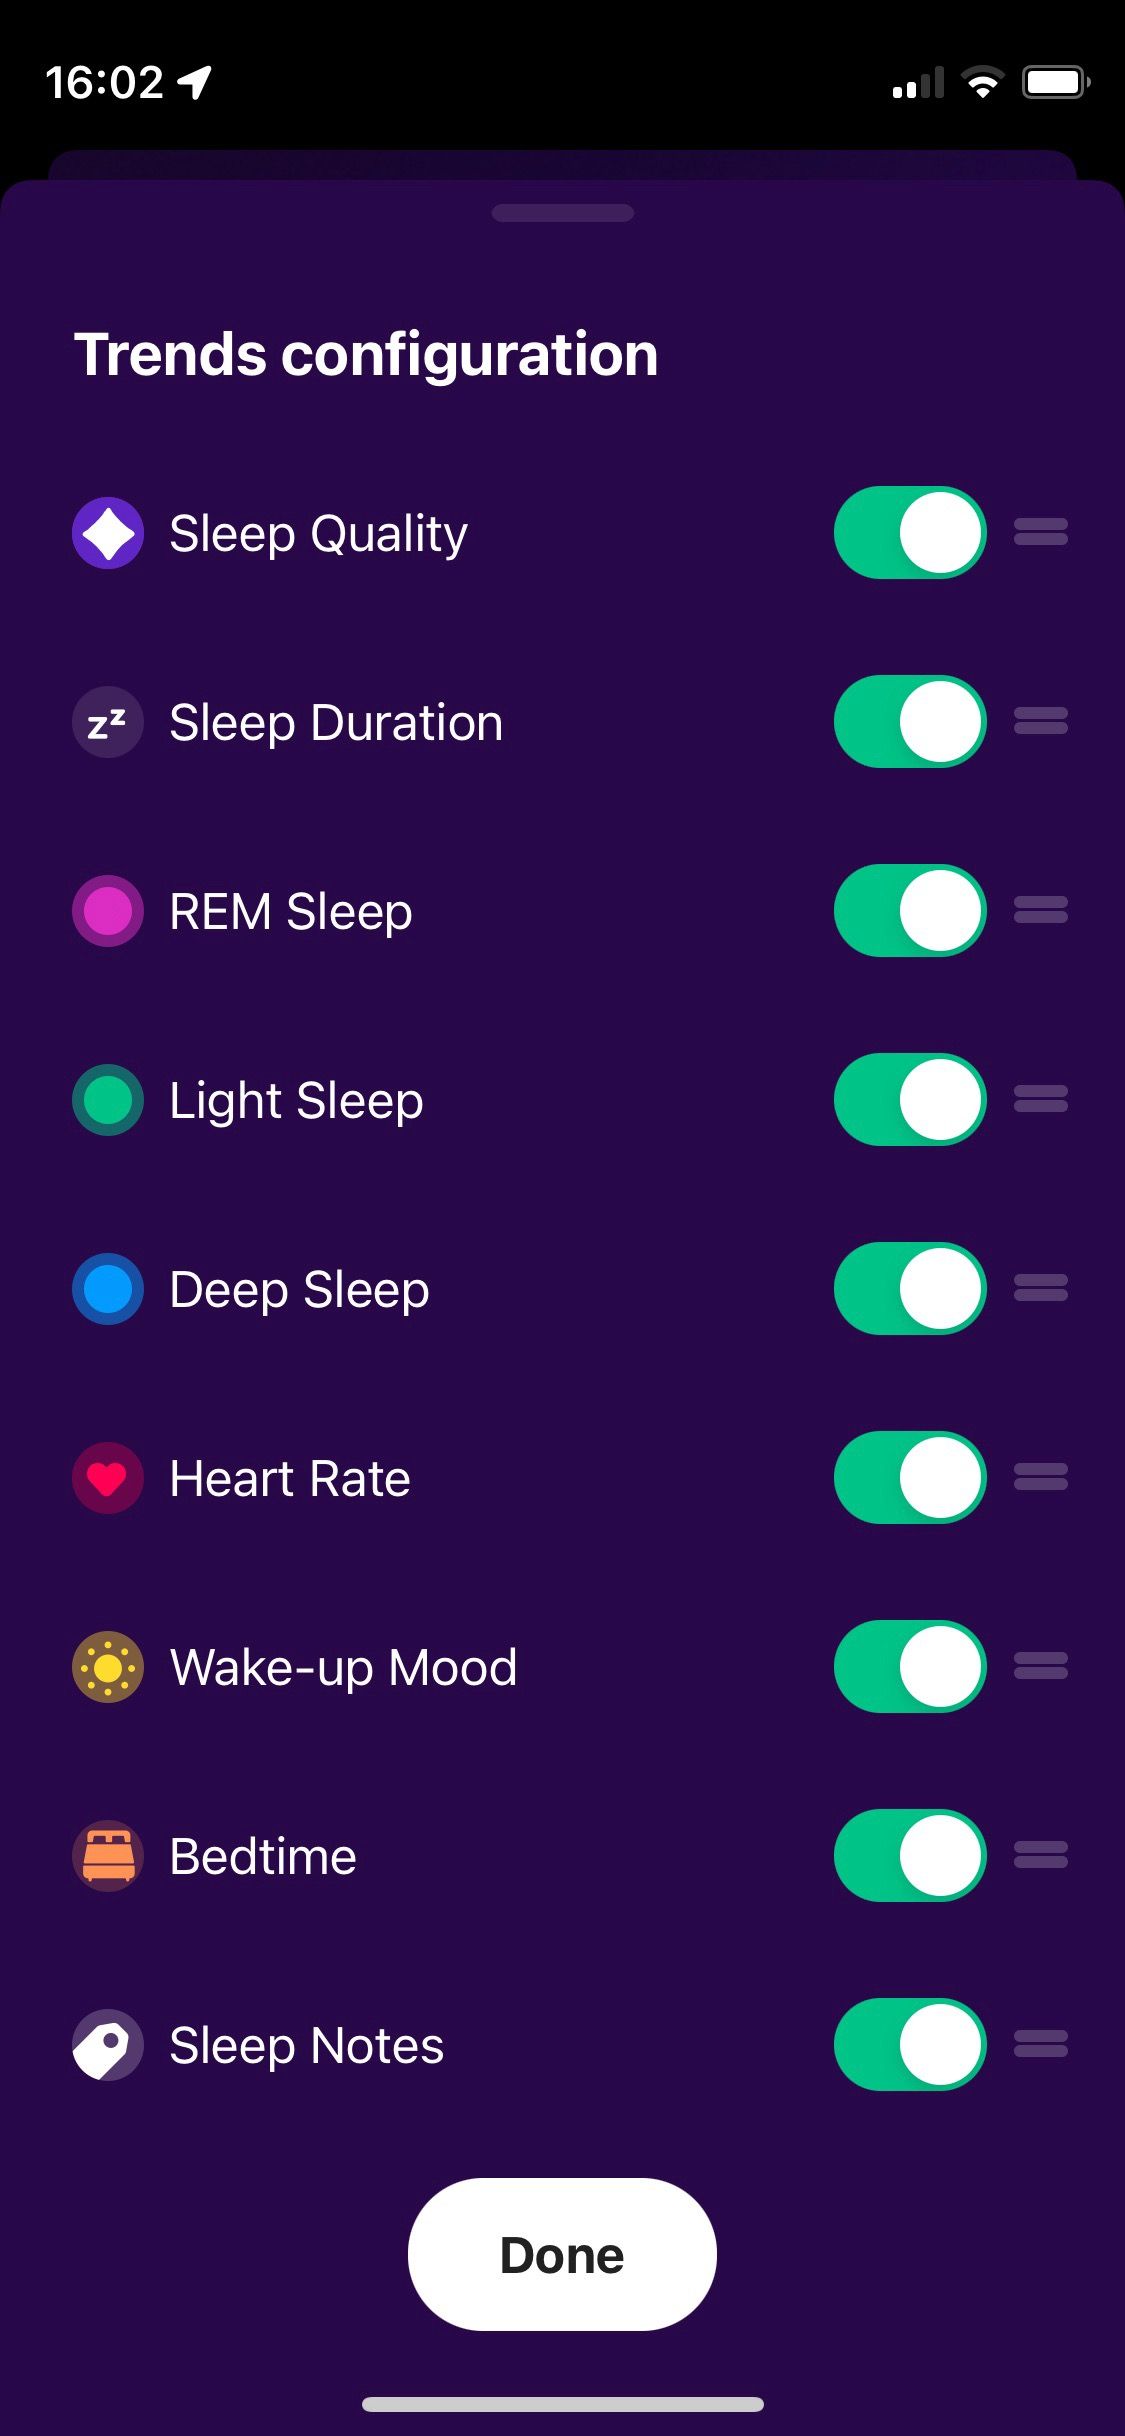 Screenshot of Pillow app showing sleep trends configuration